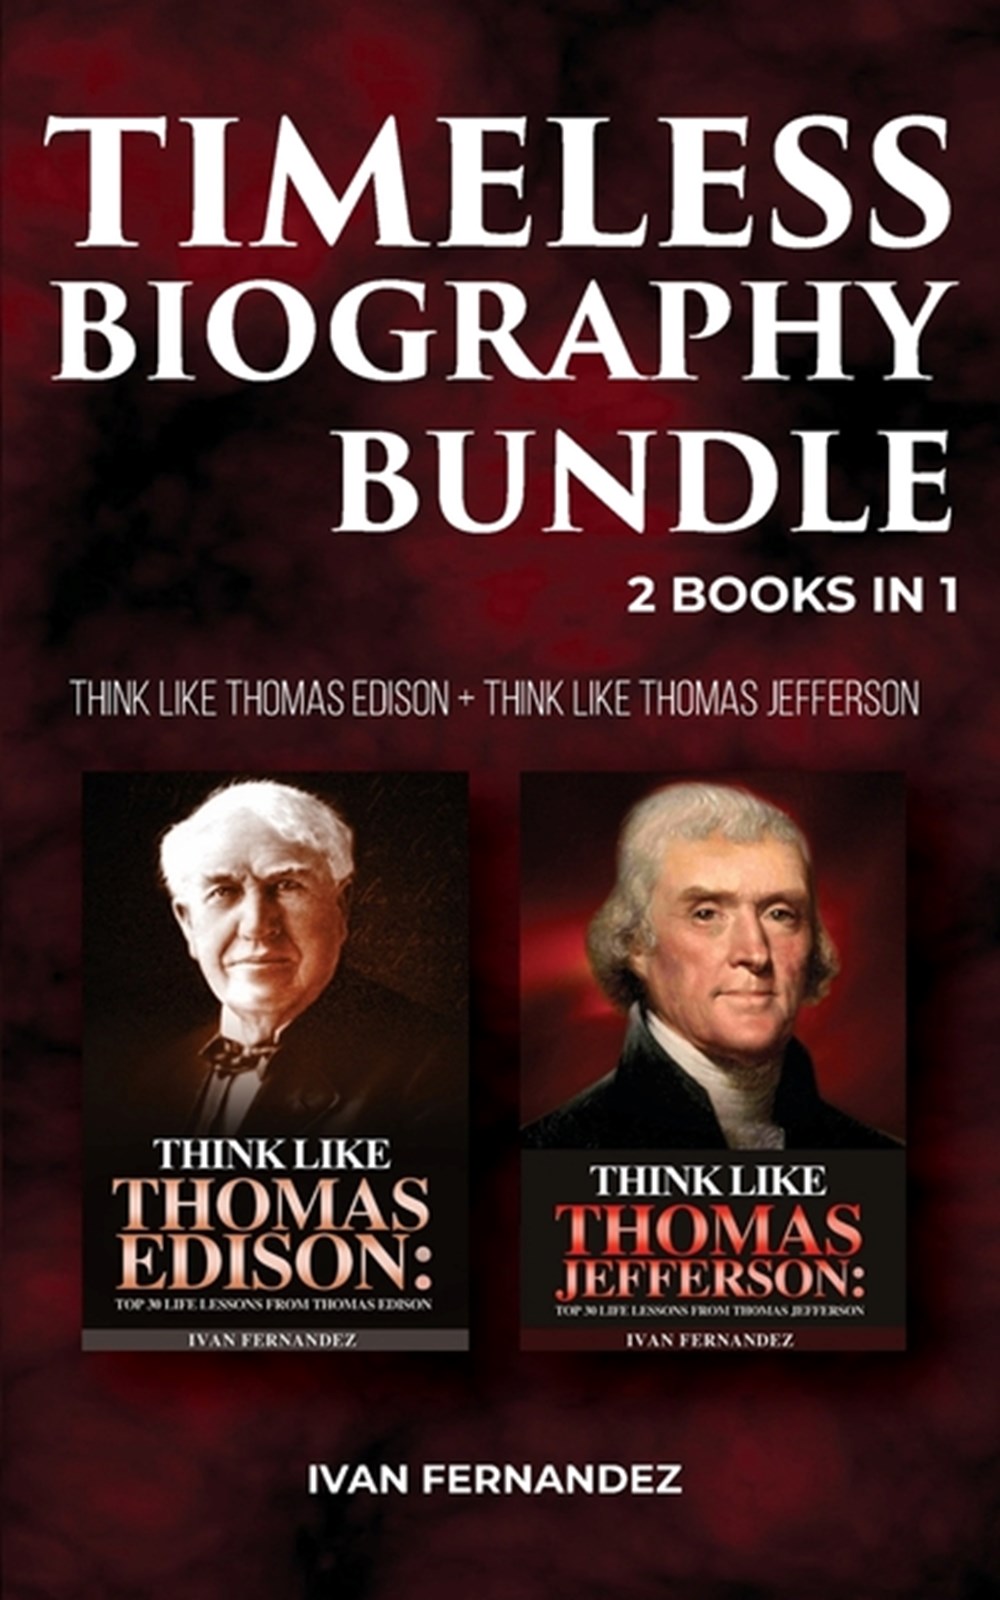 Timeless Biography Bundle 2 Books in 1: Think Like Thomas Edison + Think Like Thomas Jefferson